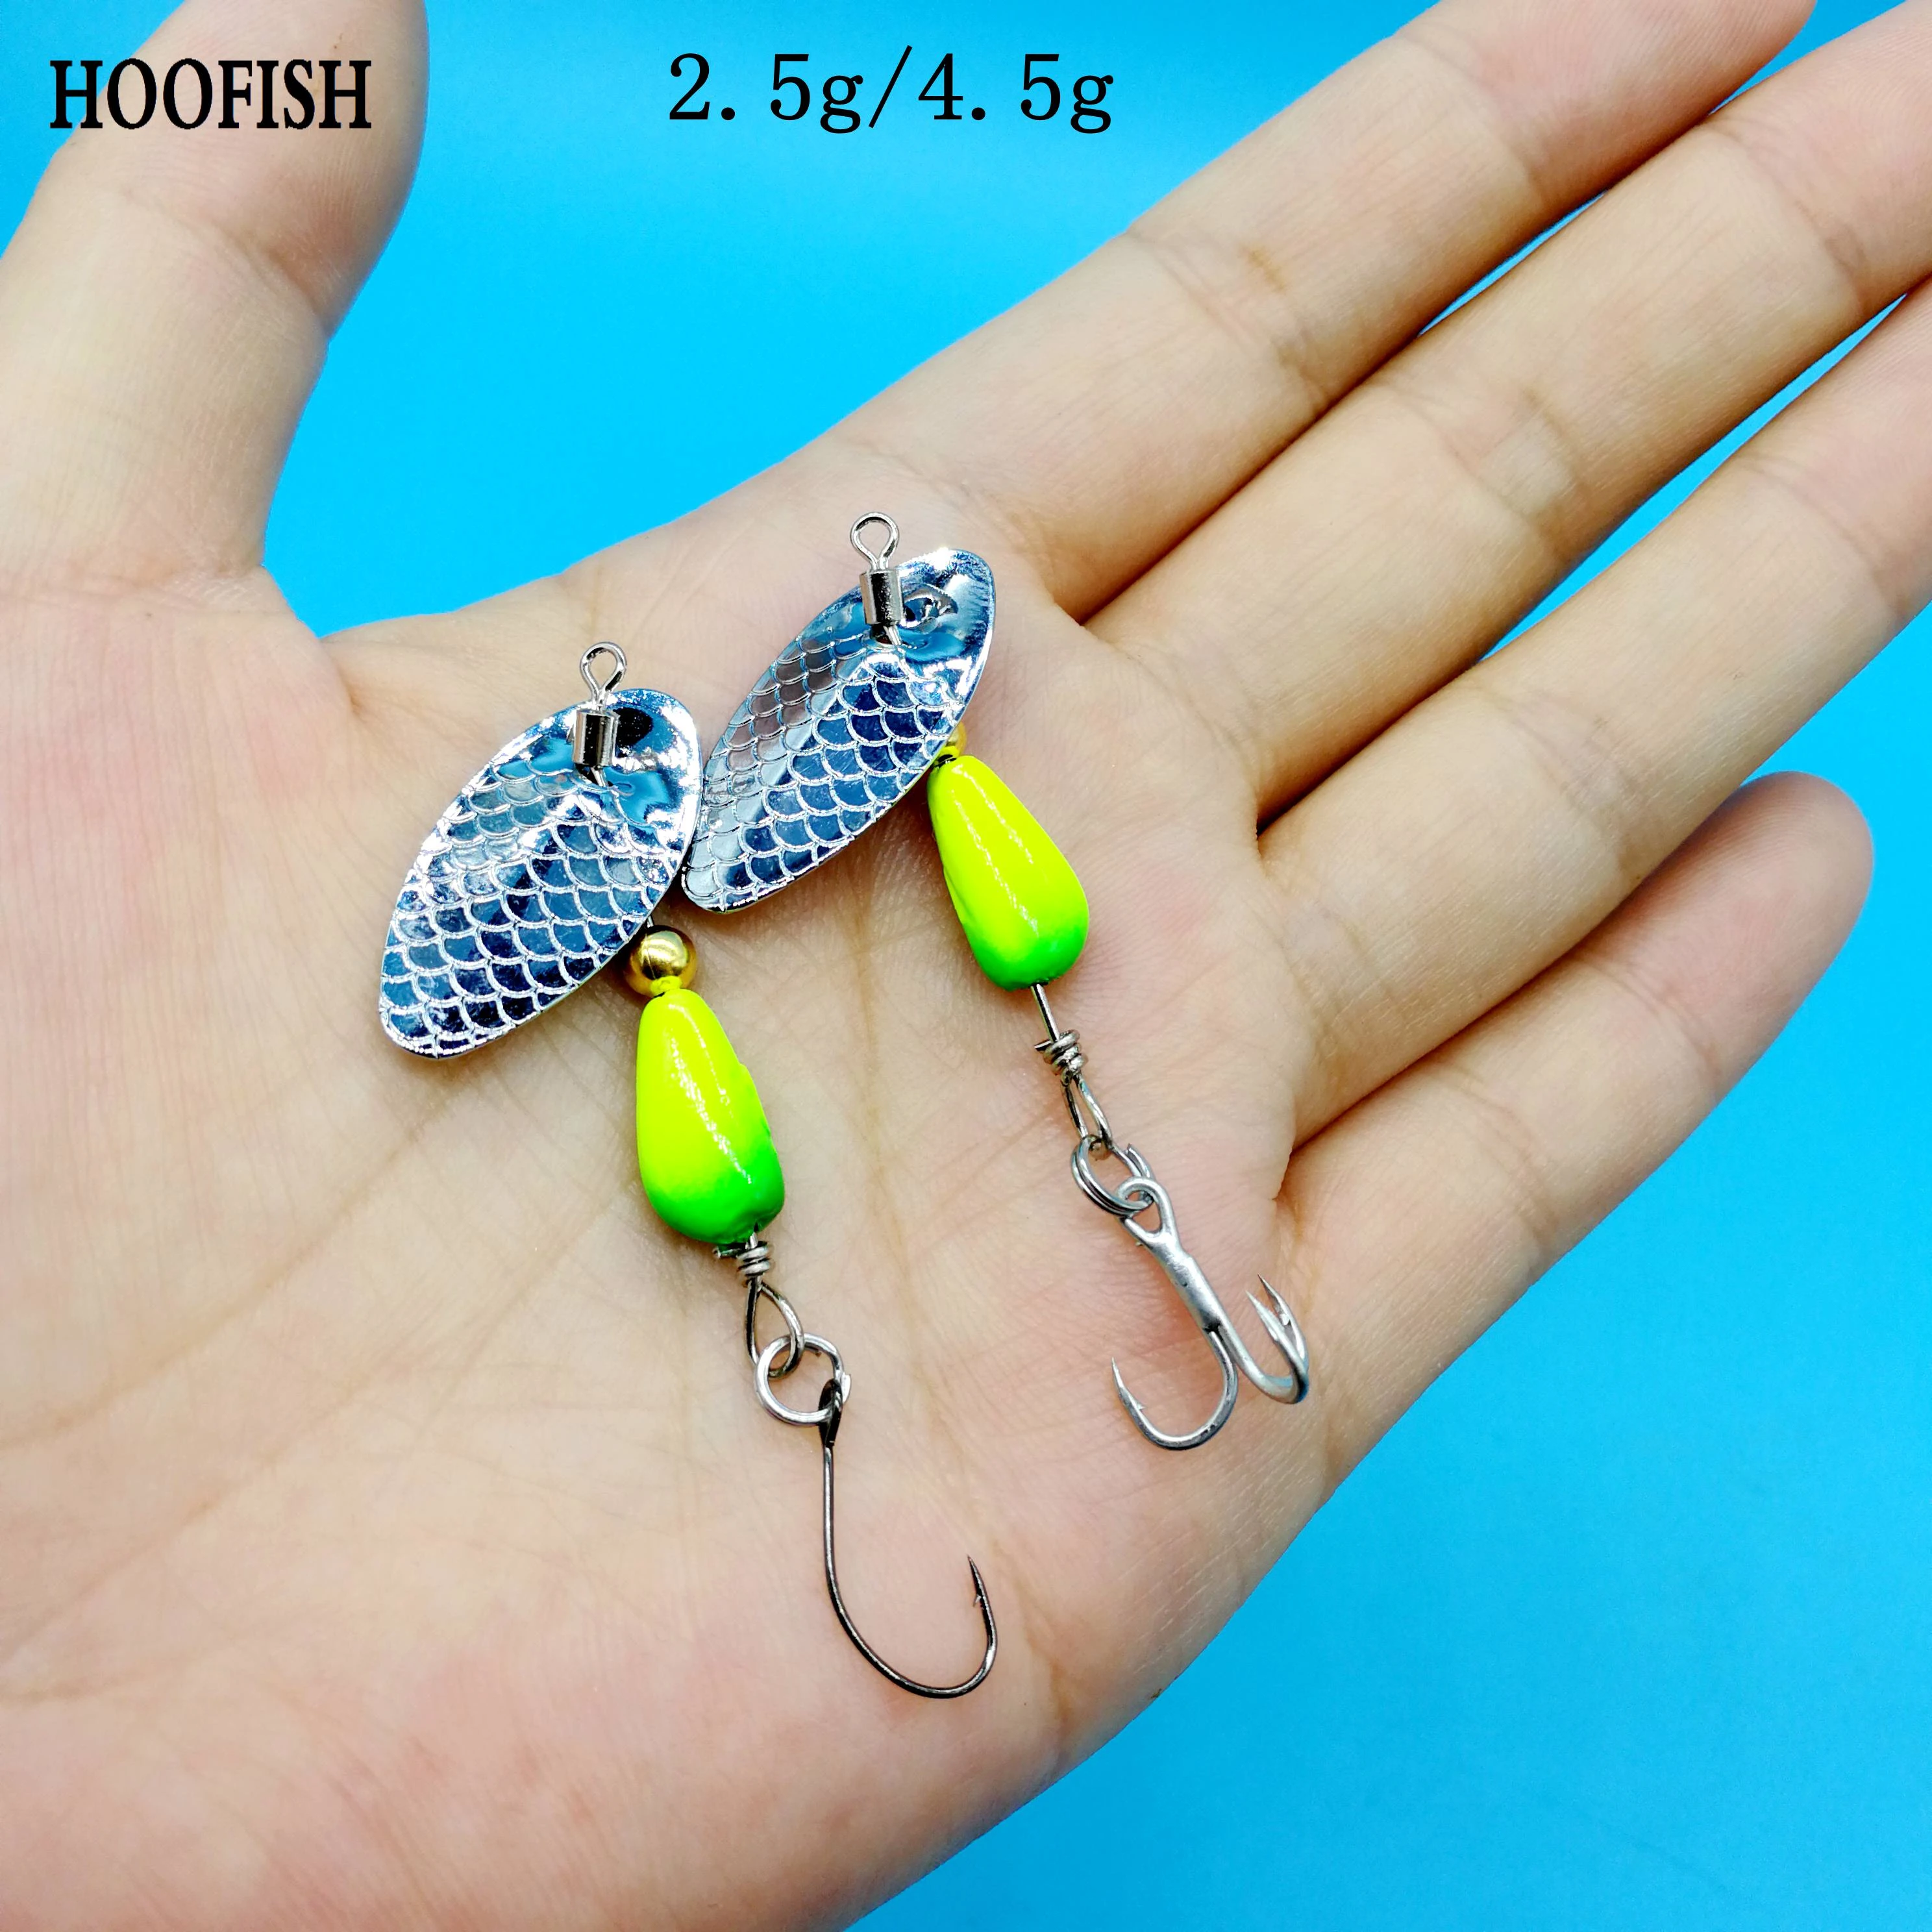 HOOFISH 5pcs/Lot Spoon Spinner Bait  2.5g/4.5g  Metal Bait Artificial Wobblers CrankBaits Jig Sequin Lure Fishing Tackle